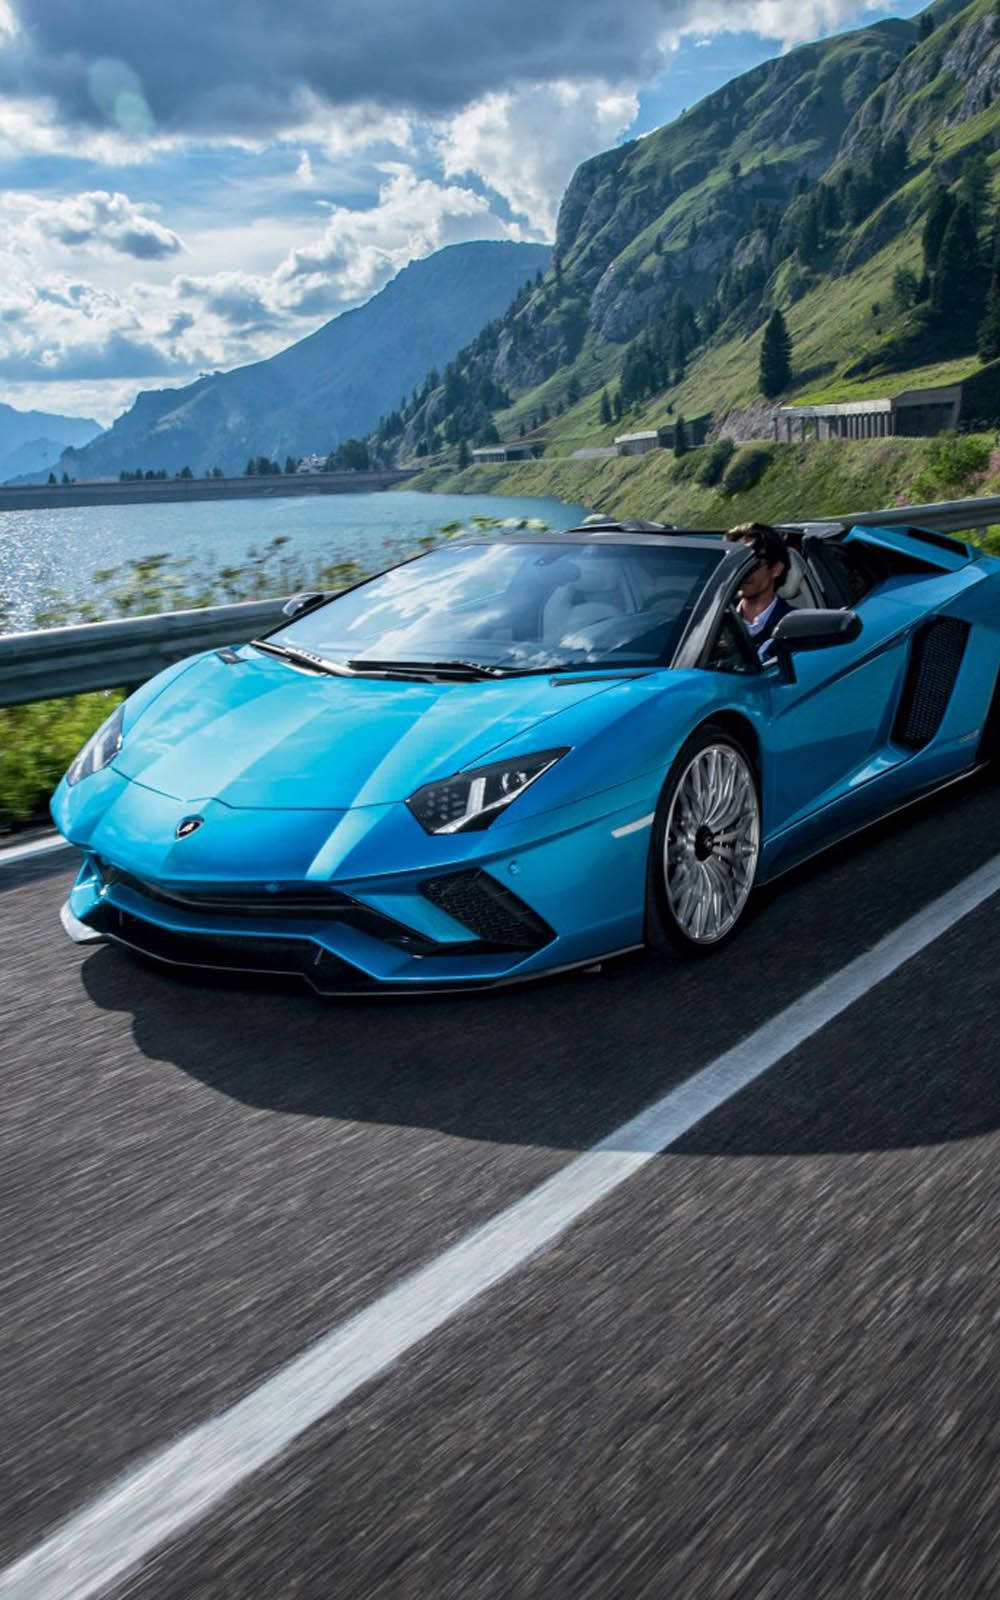 Lamborghini Iphone Blue Aesthetic Green Mountain Background